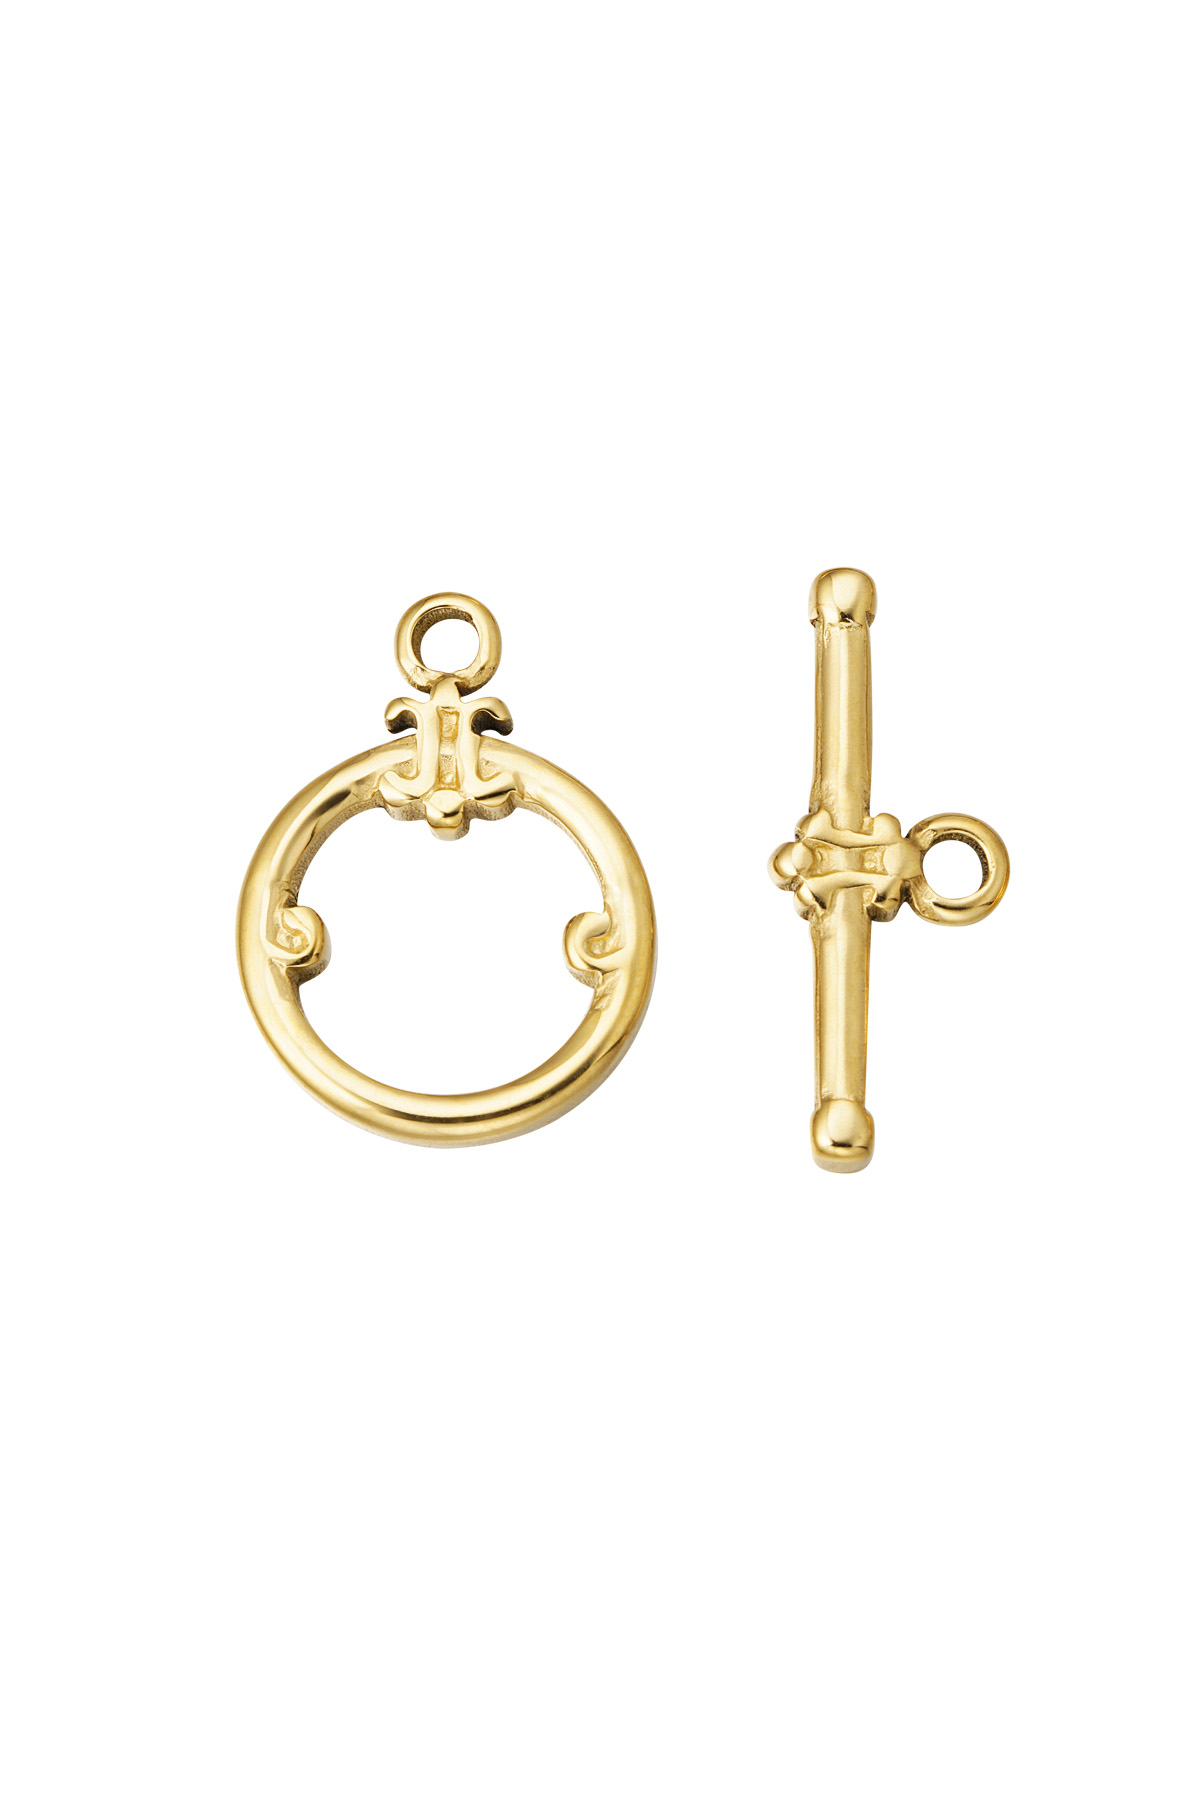 DIY Endverbindung Halskette und Armband gedrehter Kreis anmutig – Gold